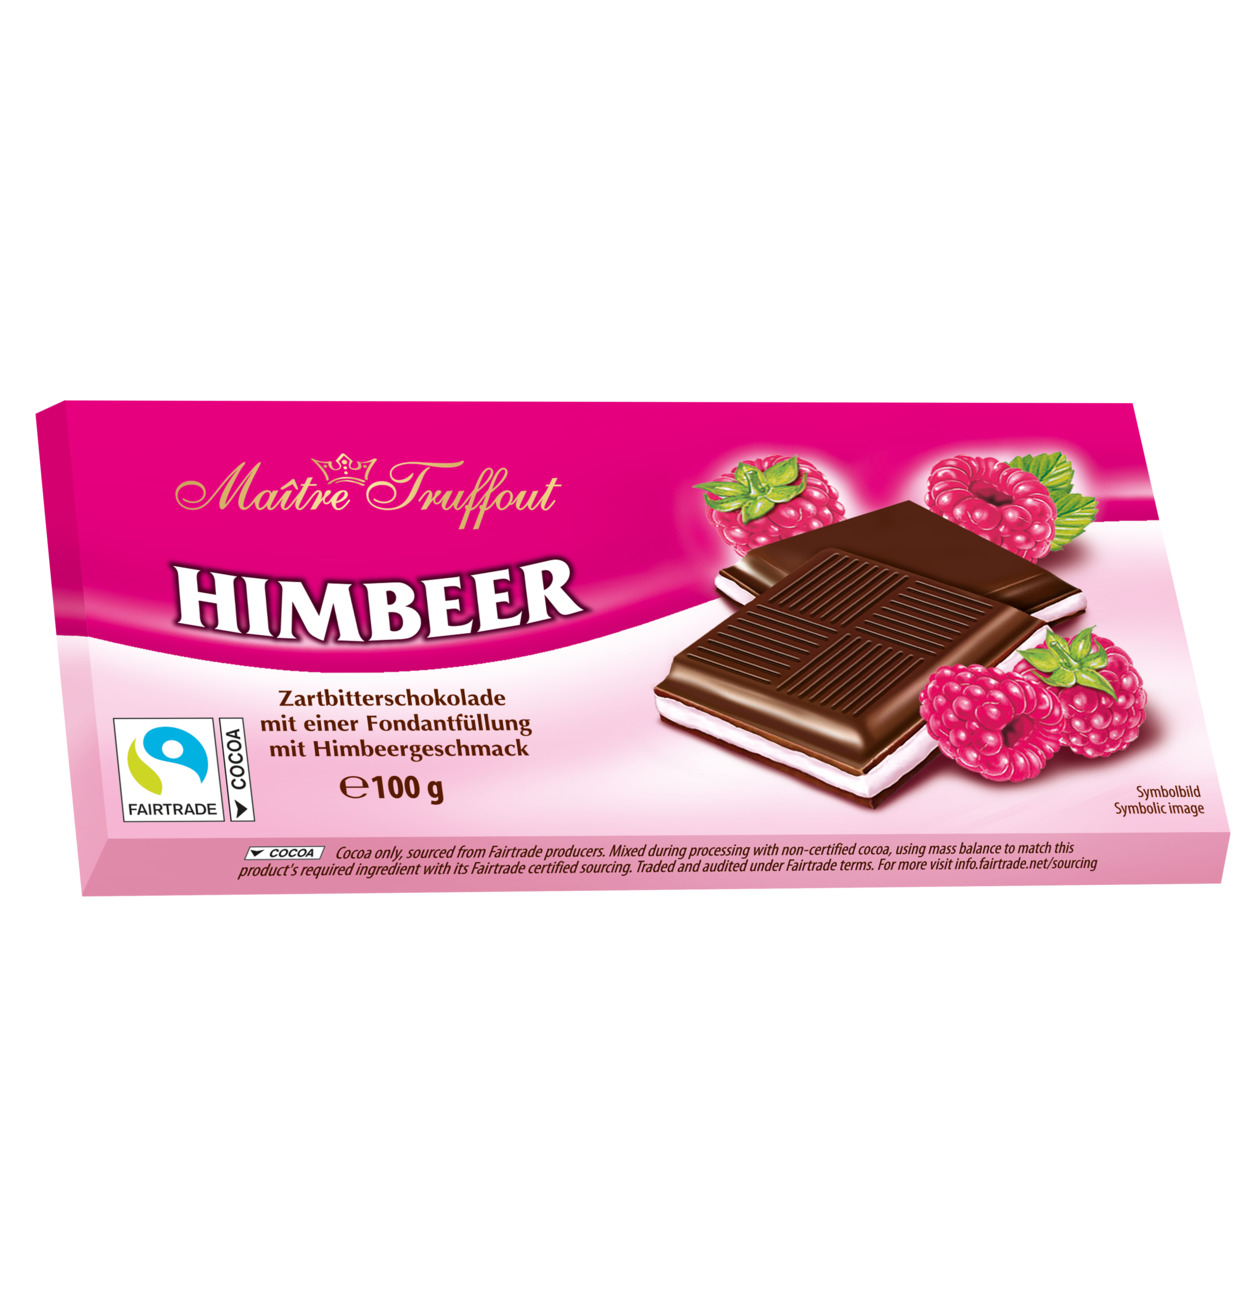 Zartbitterschokolade | MÂITRE Mein - Himbeer Onlineshop Ness 100g Einkaufsmarkt TRUFFOUT